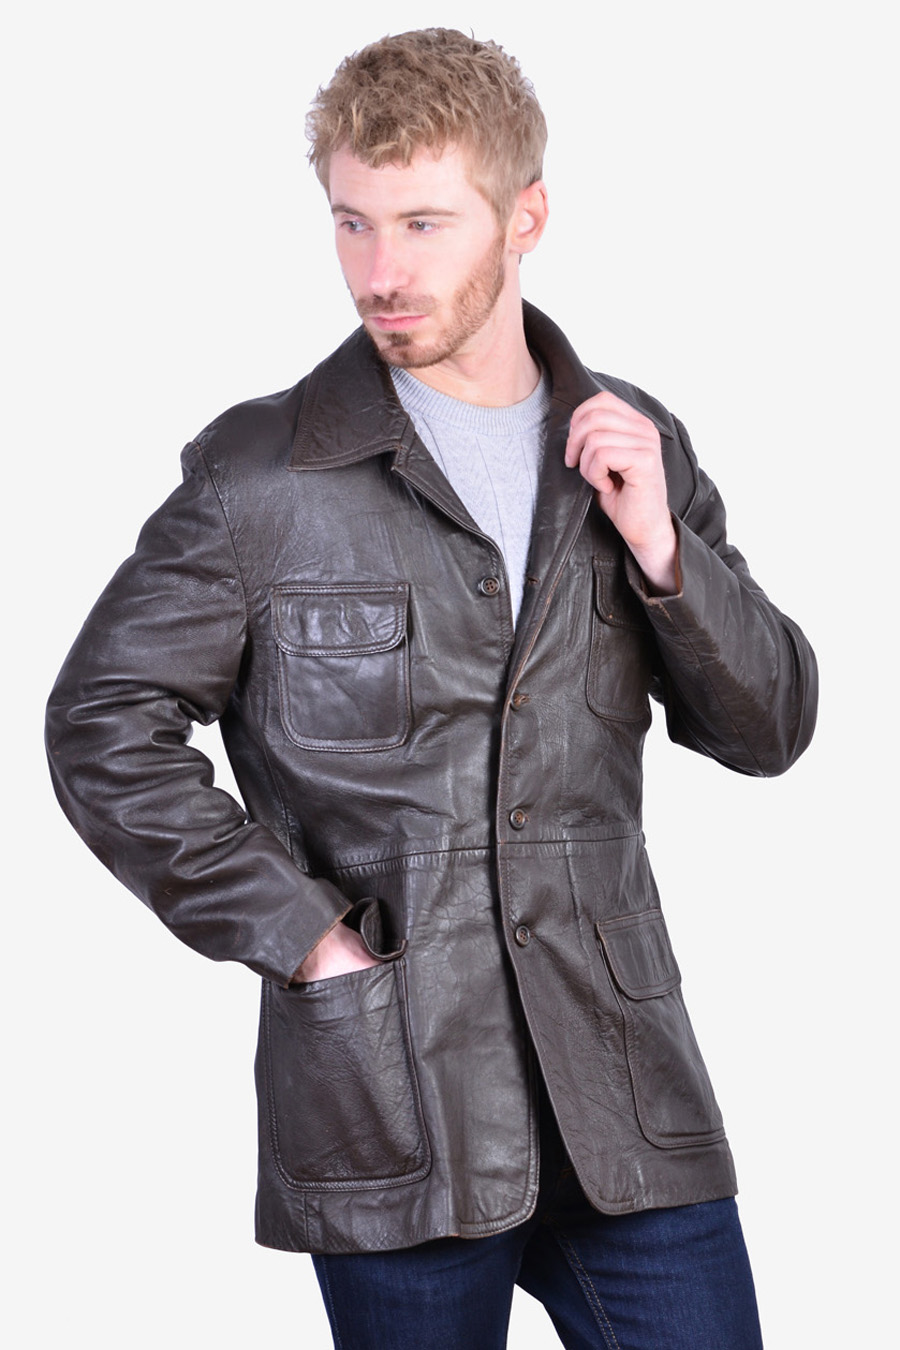 Vintage retro leather jacket